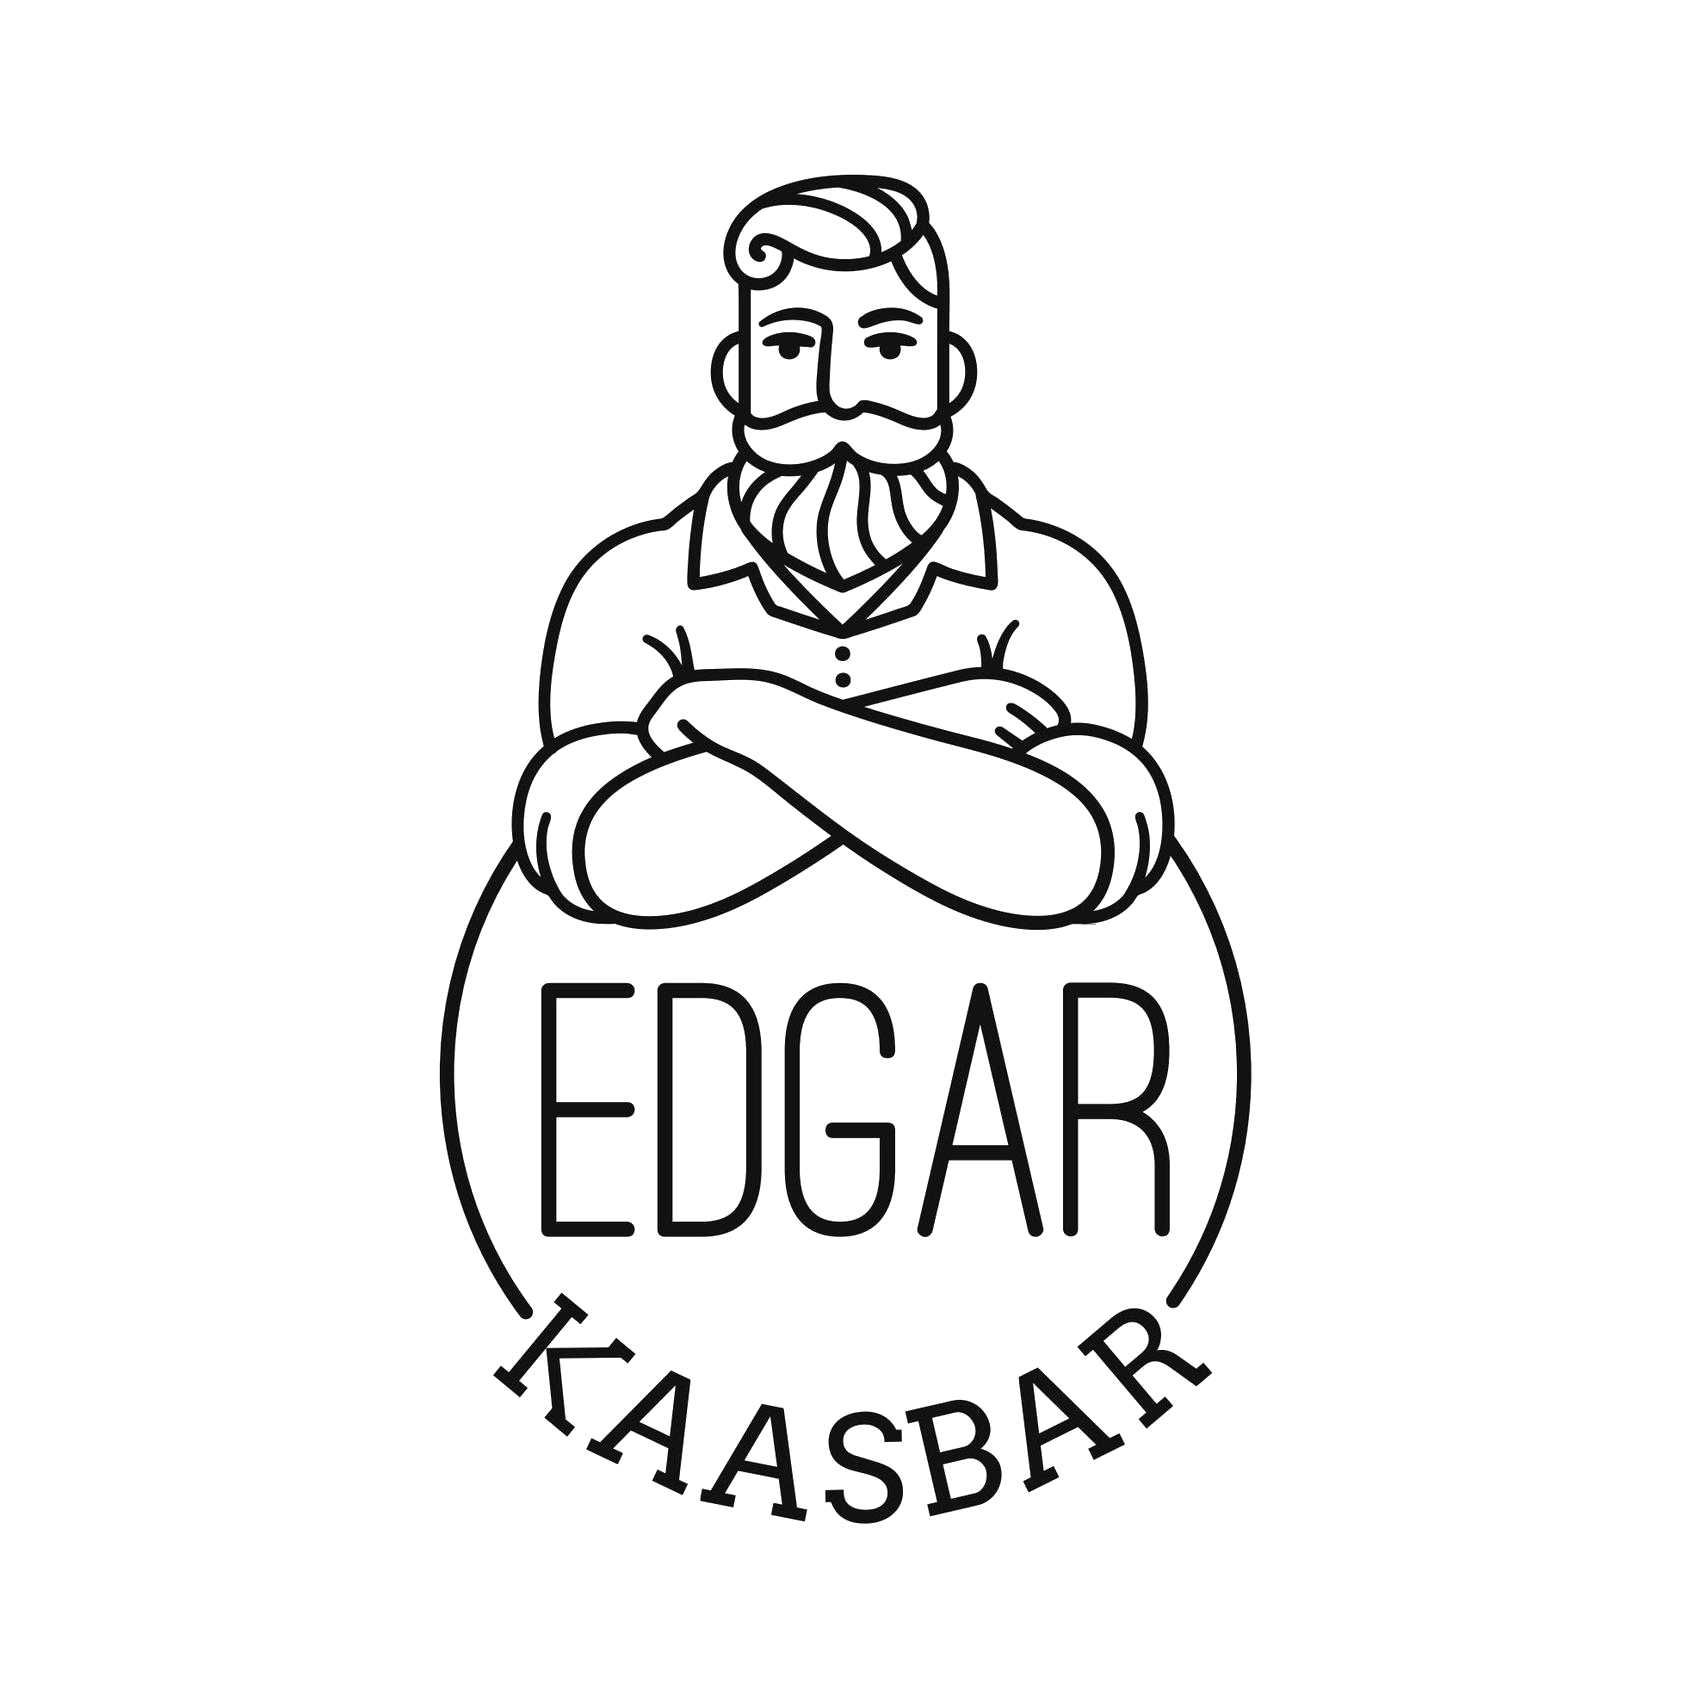 Edgar kaasbar